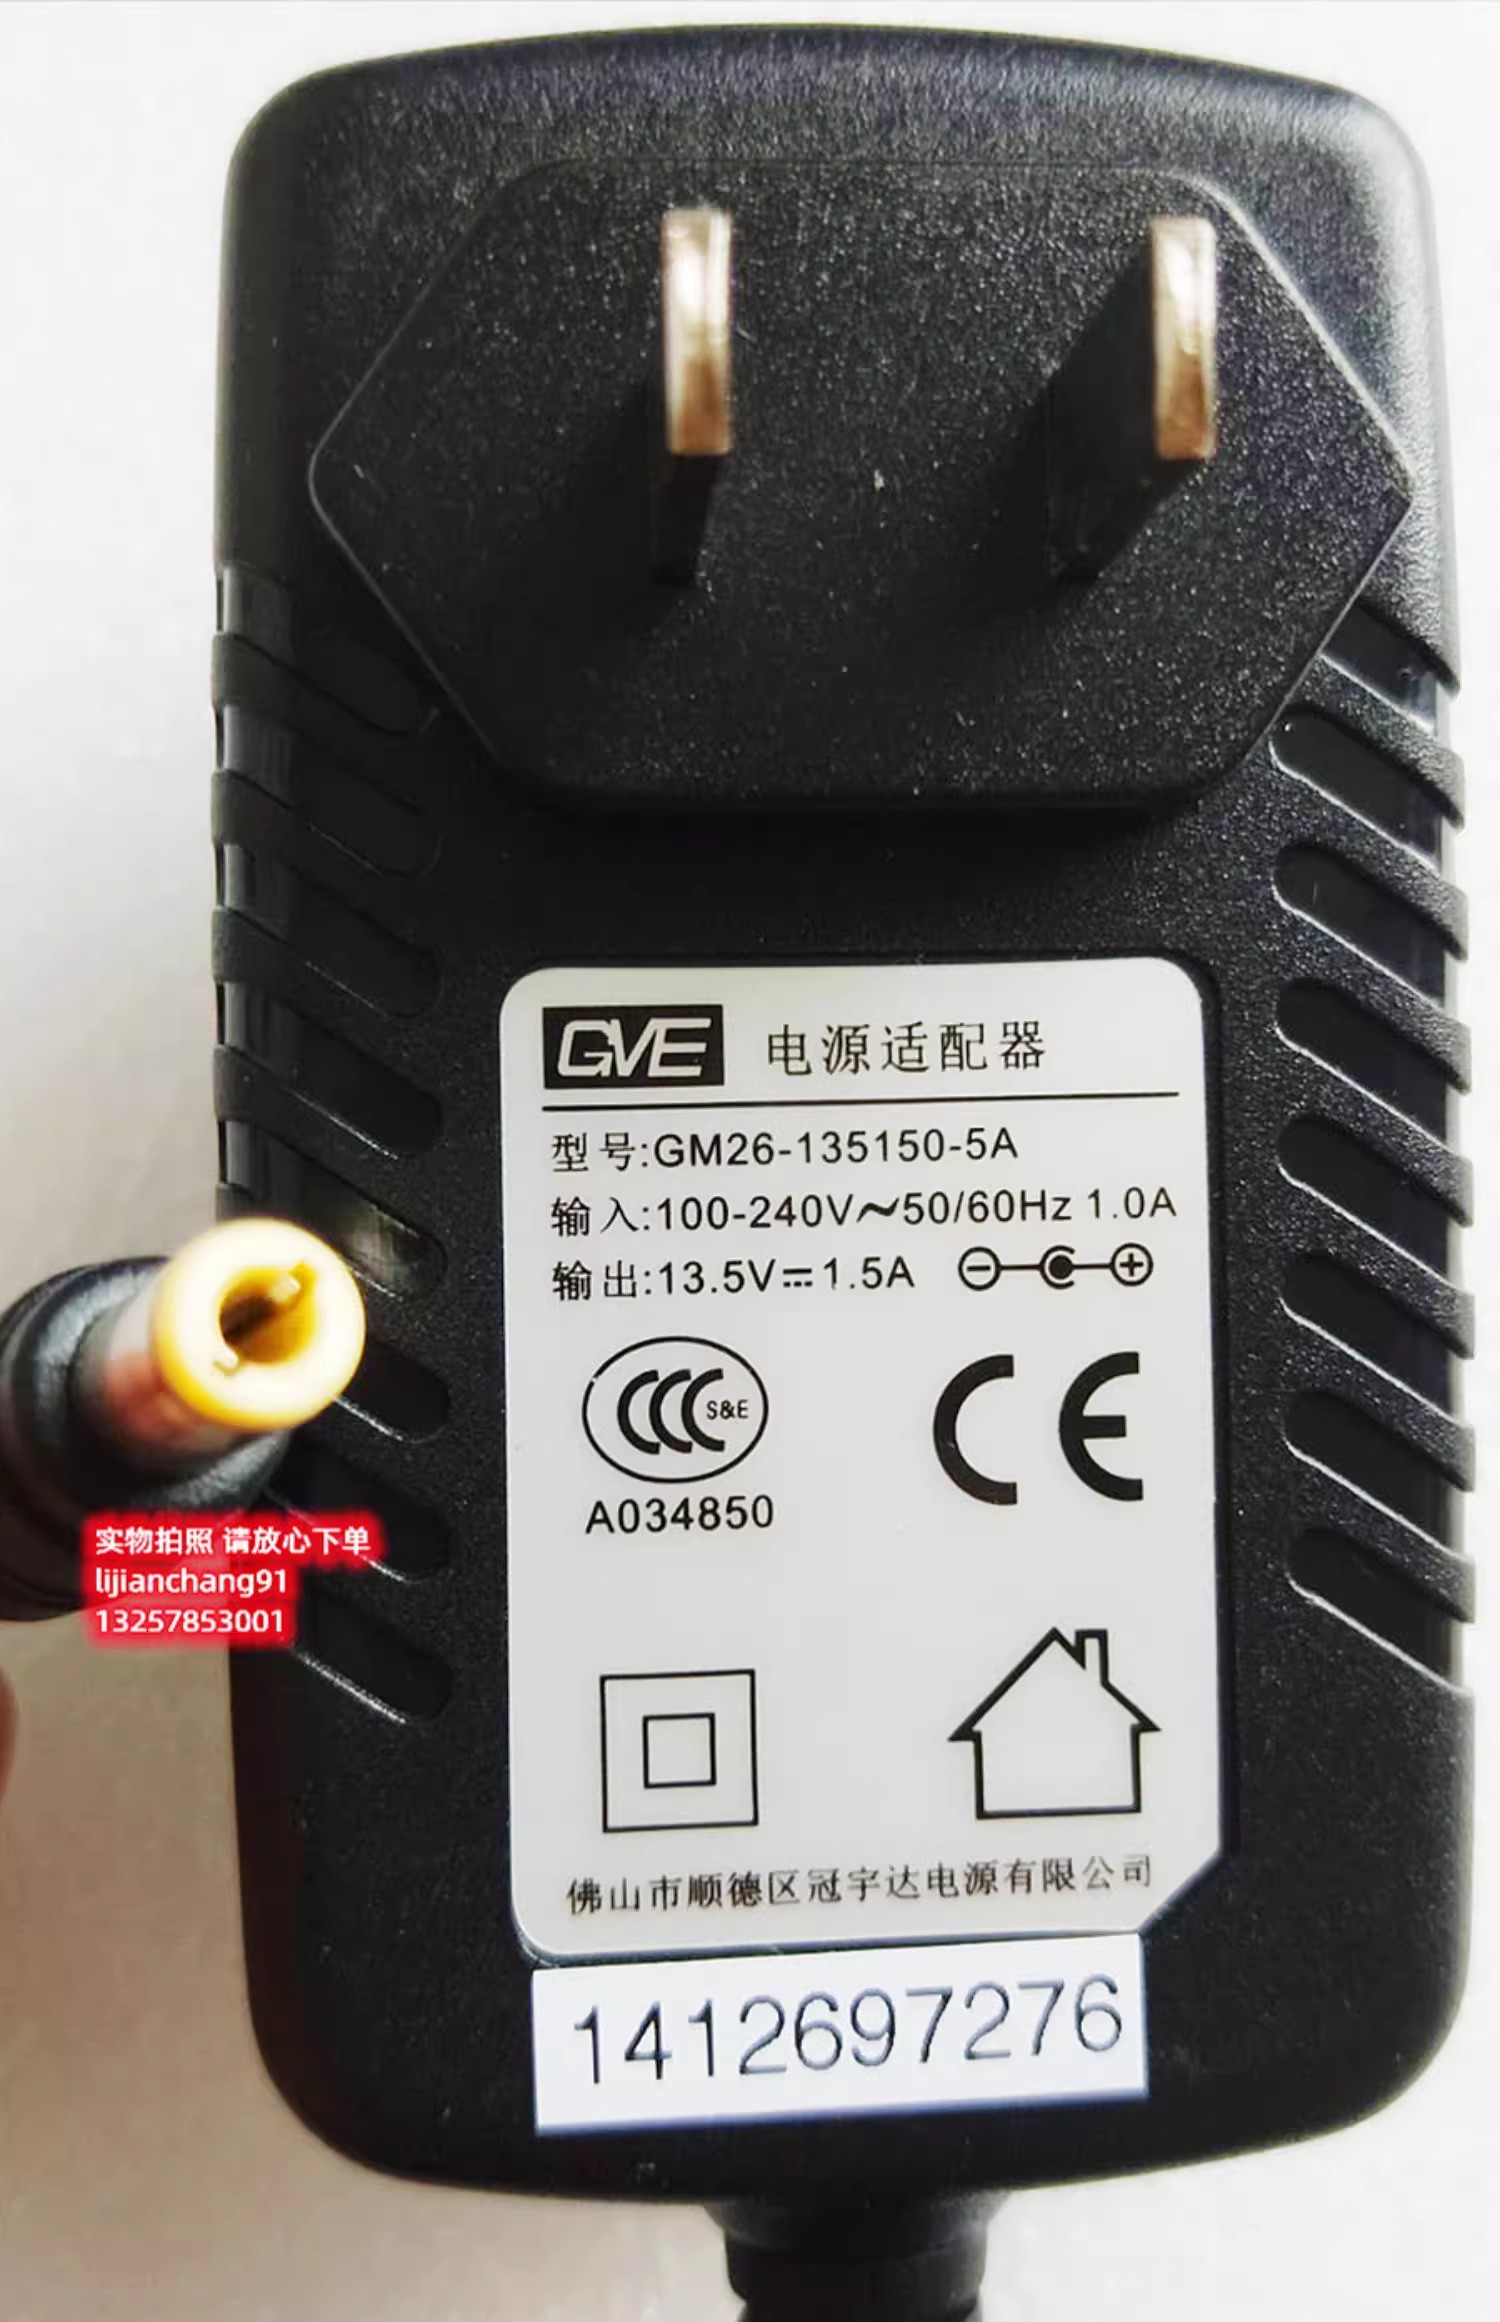 *Brand NEW*GM26-135150-5A GVE 13.5V 1.5A AC ADAPTER Power Supply